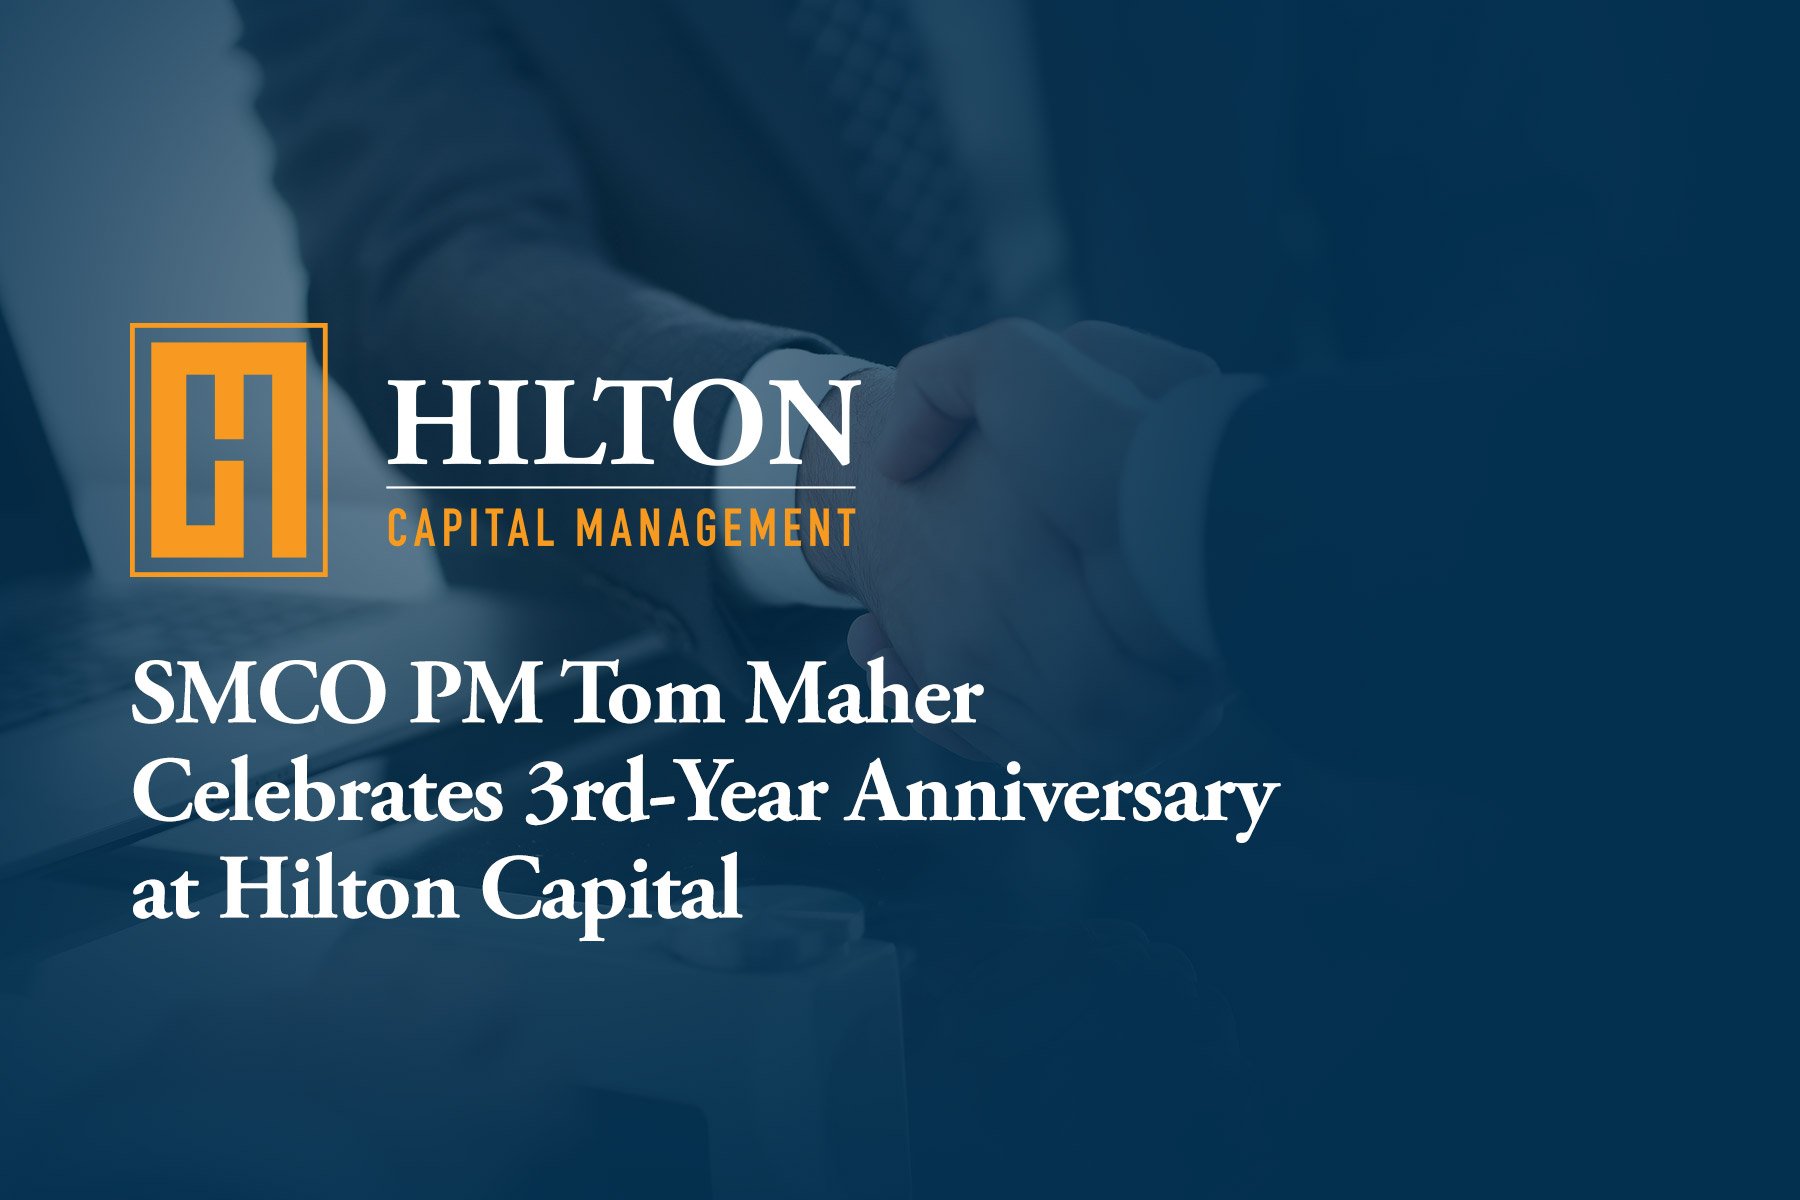 SMCO PM Tom Maher Celebrates 3rd-Year Anniversary at Hilton Capital